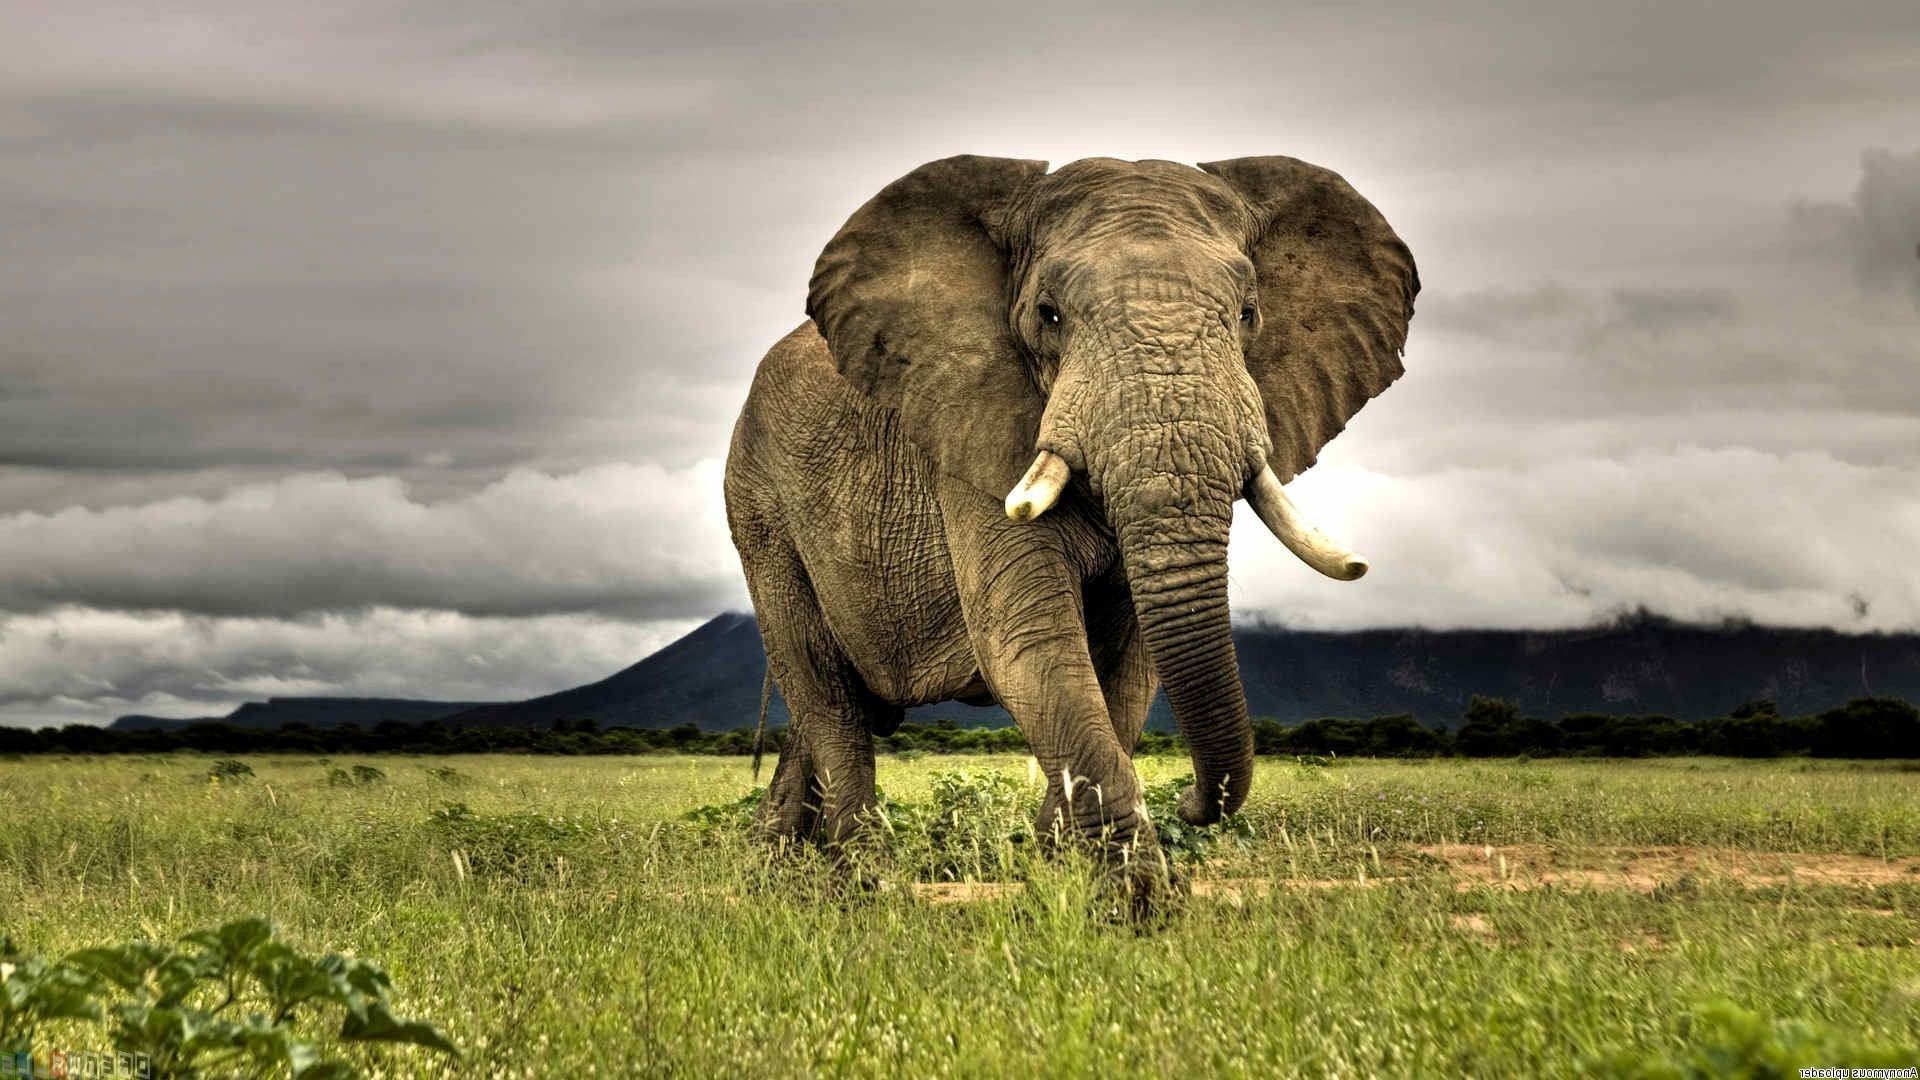 elephants, Animals, African, Nature, Grass, Savannah, Overcast